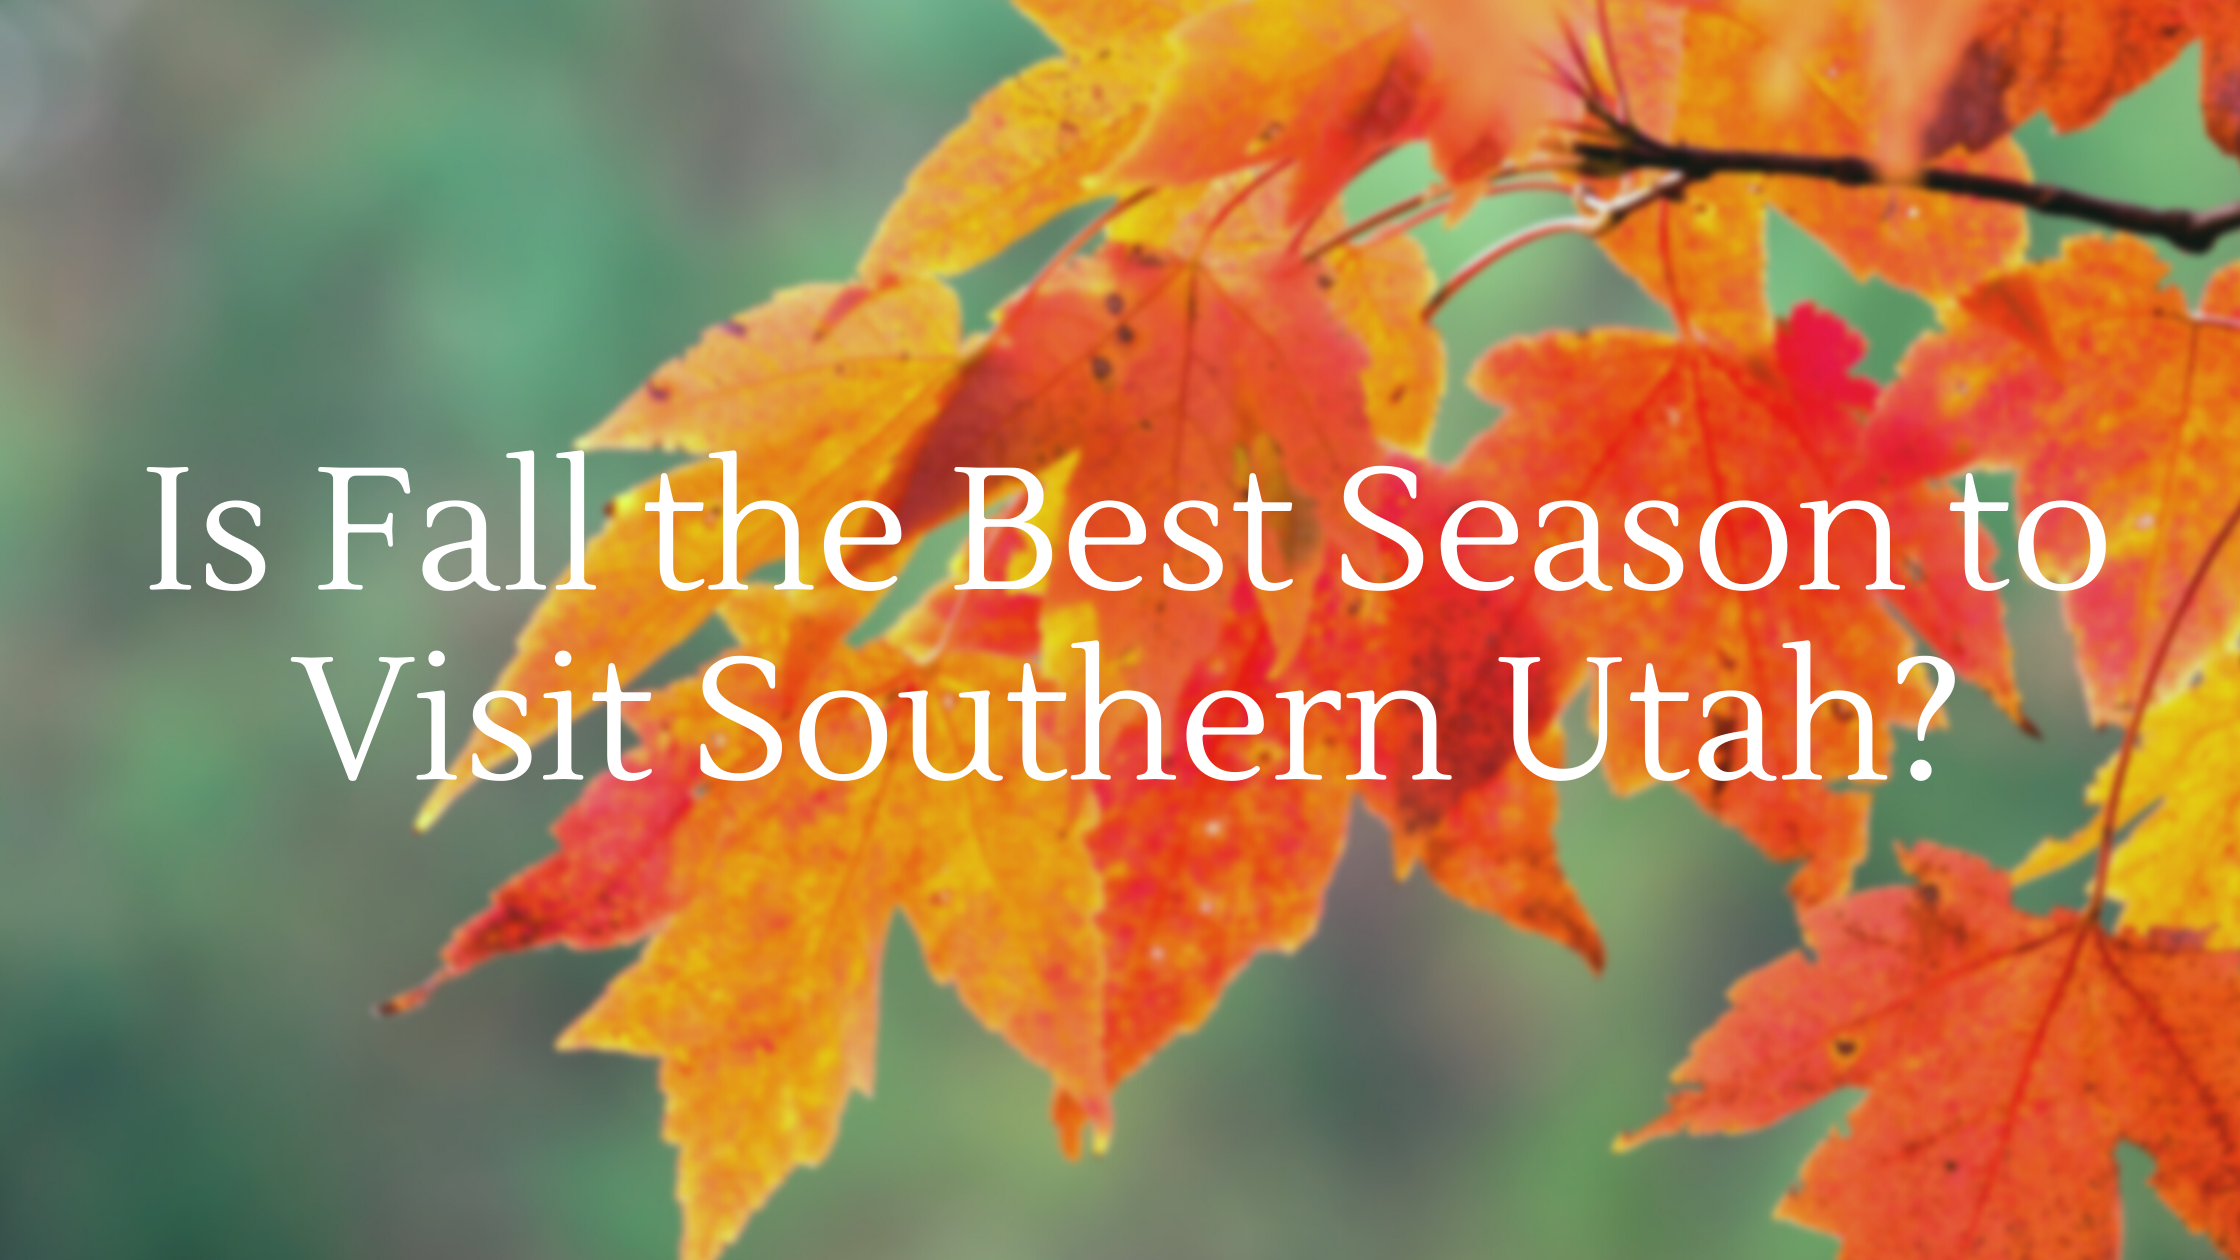 Is Fall the Best Season to Visit Southern Utah image of leaves